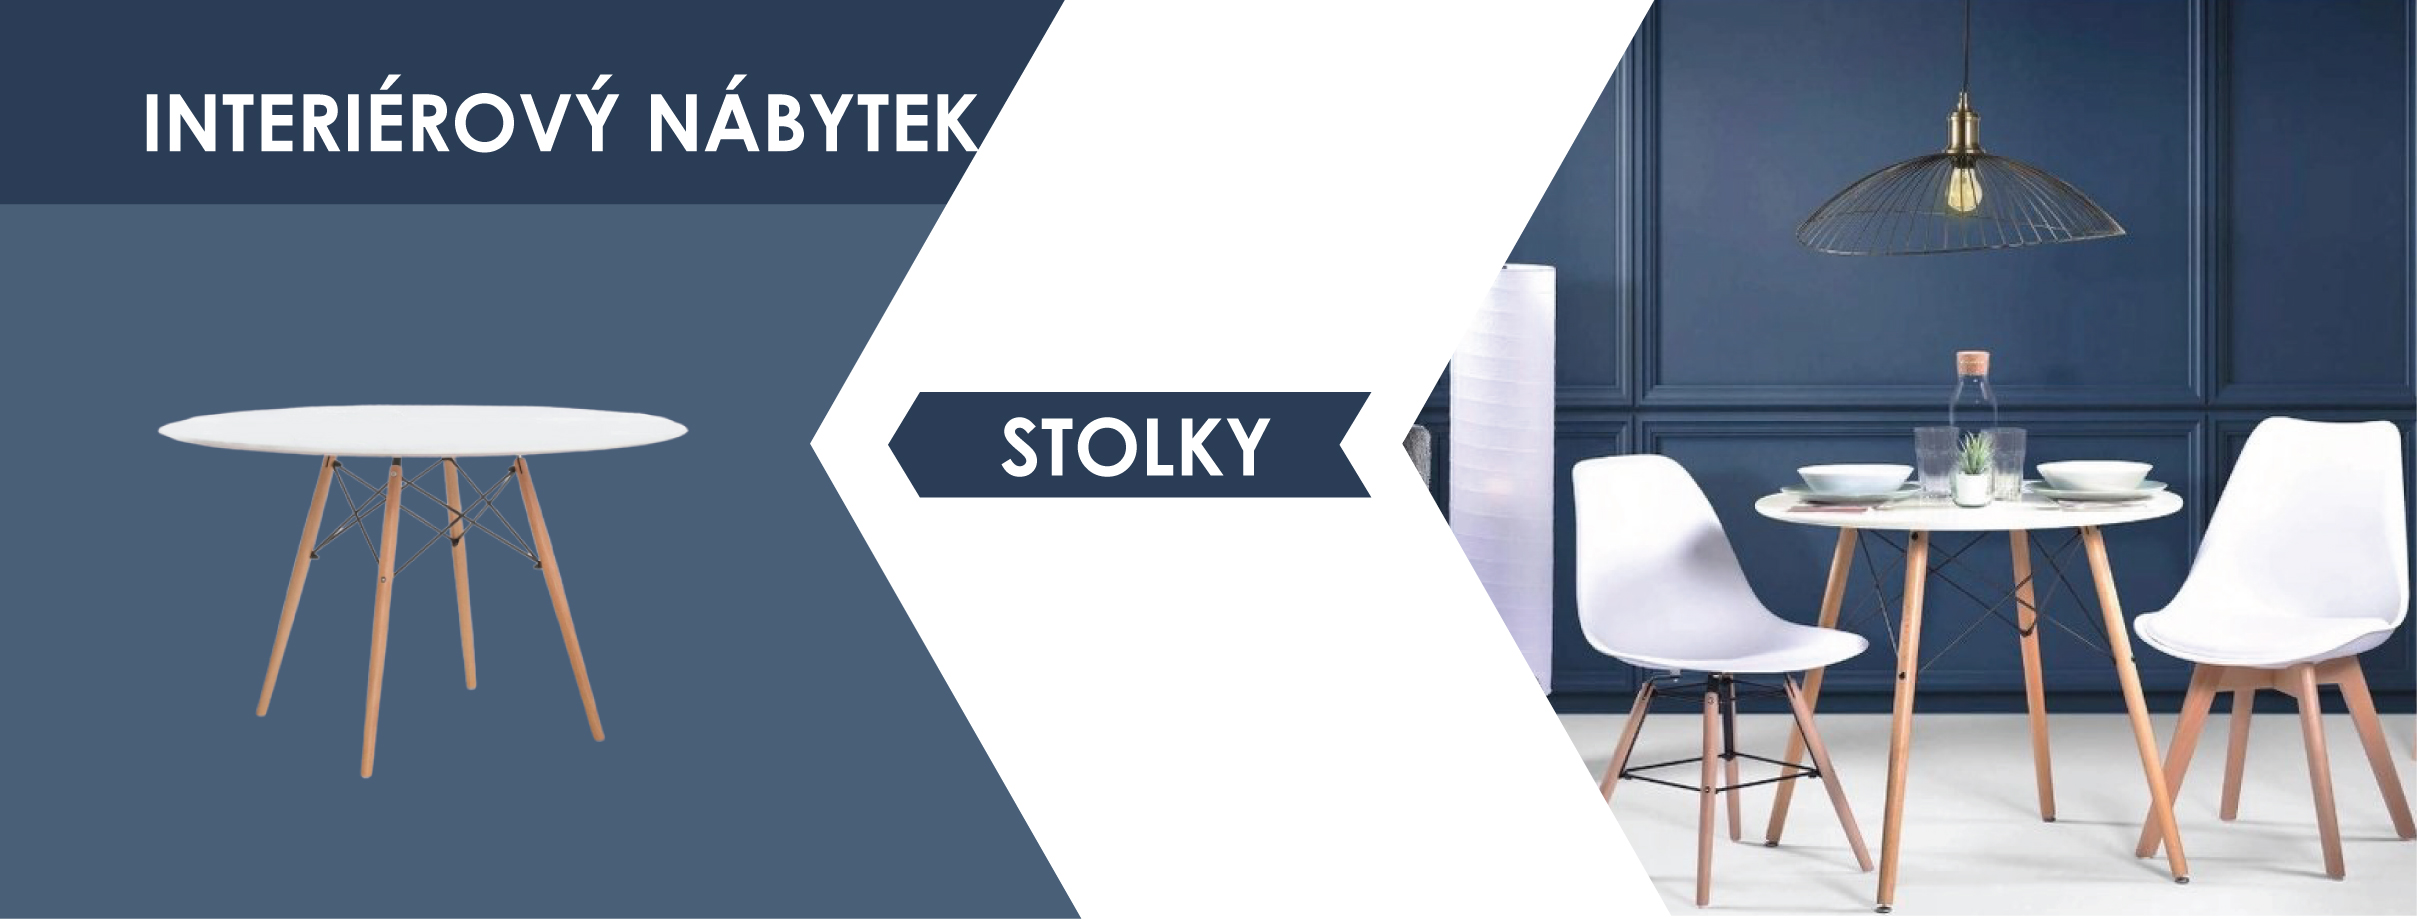 CZ_NABYTOK_STOLIKY-01-01-01